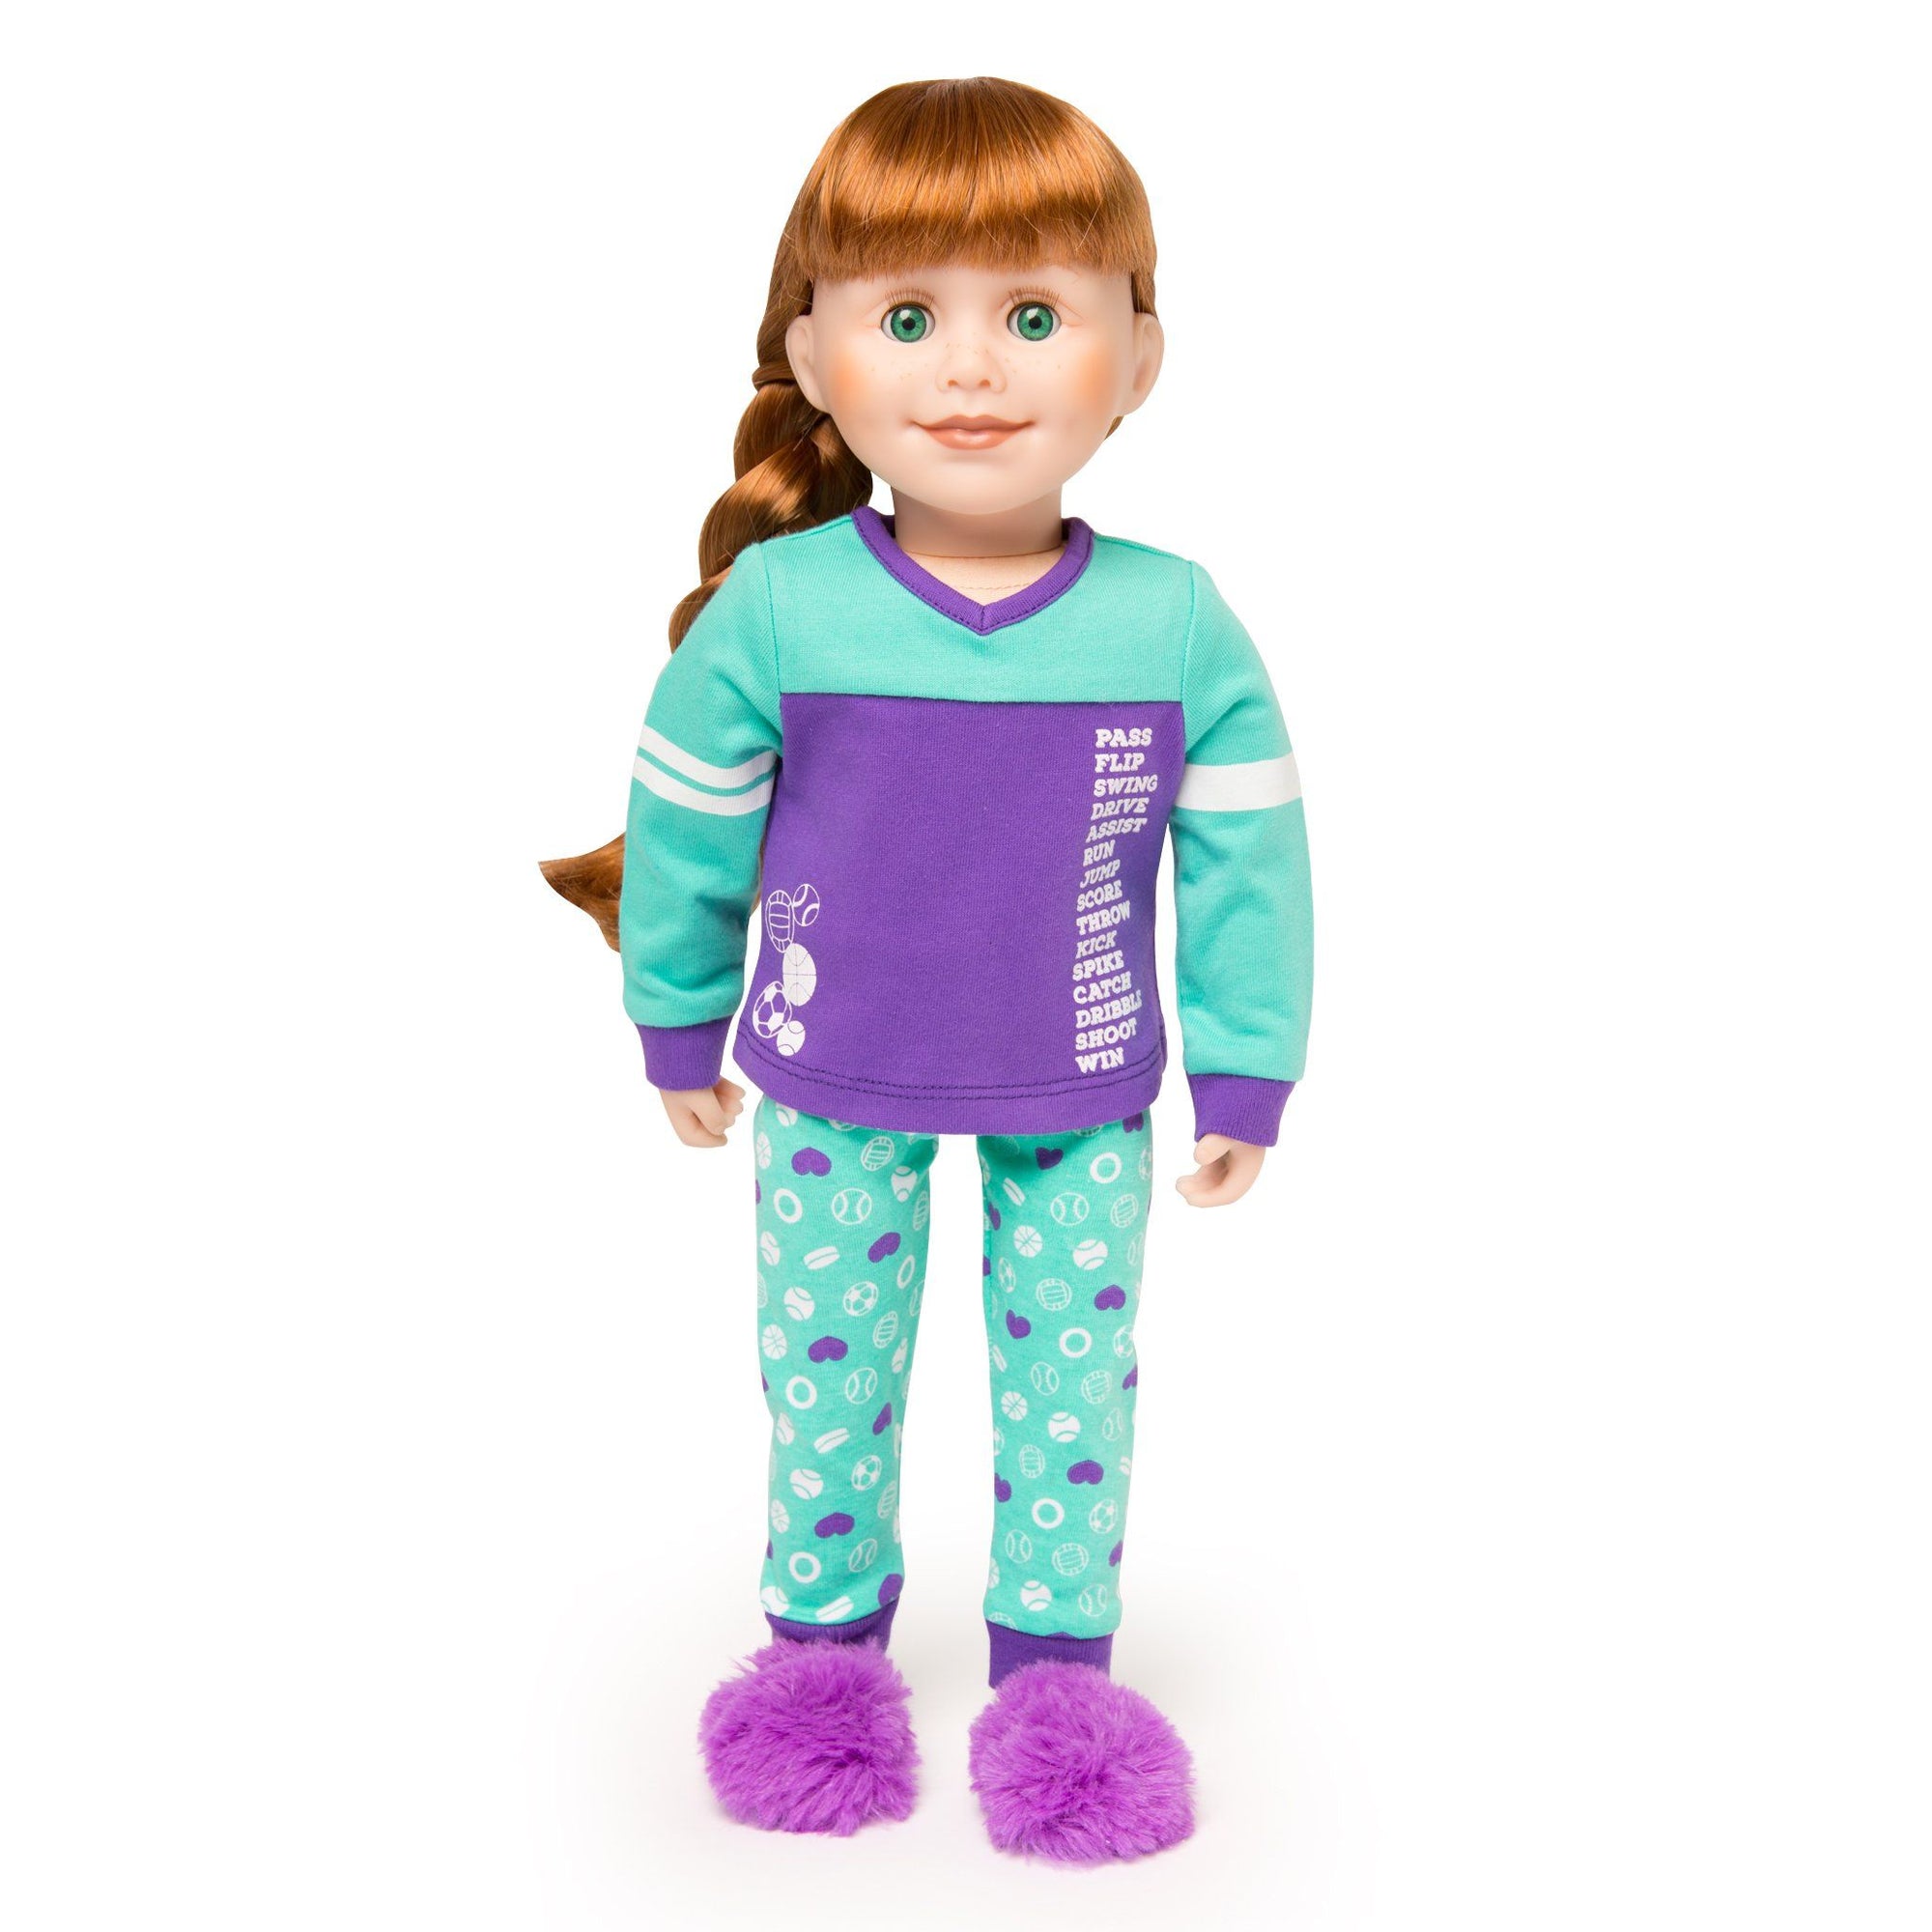 Maplelea  Jenna's Activewear Yoga Set for 18 inch dolls